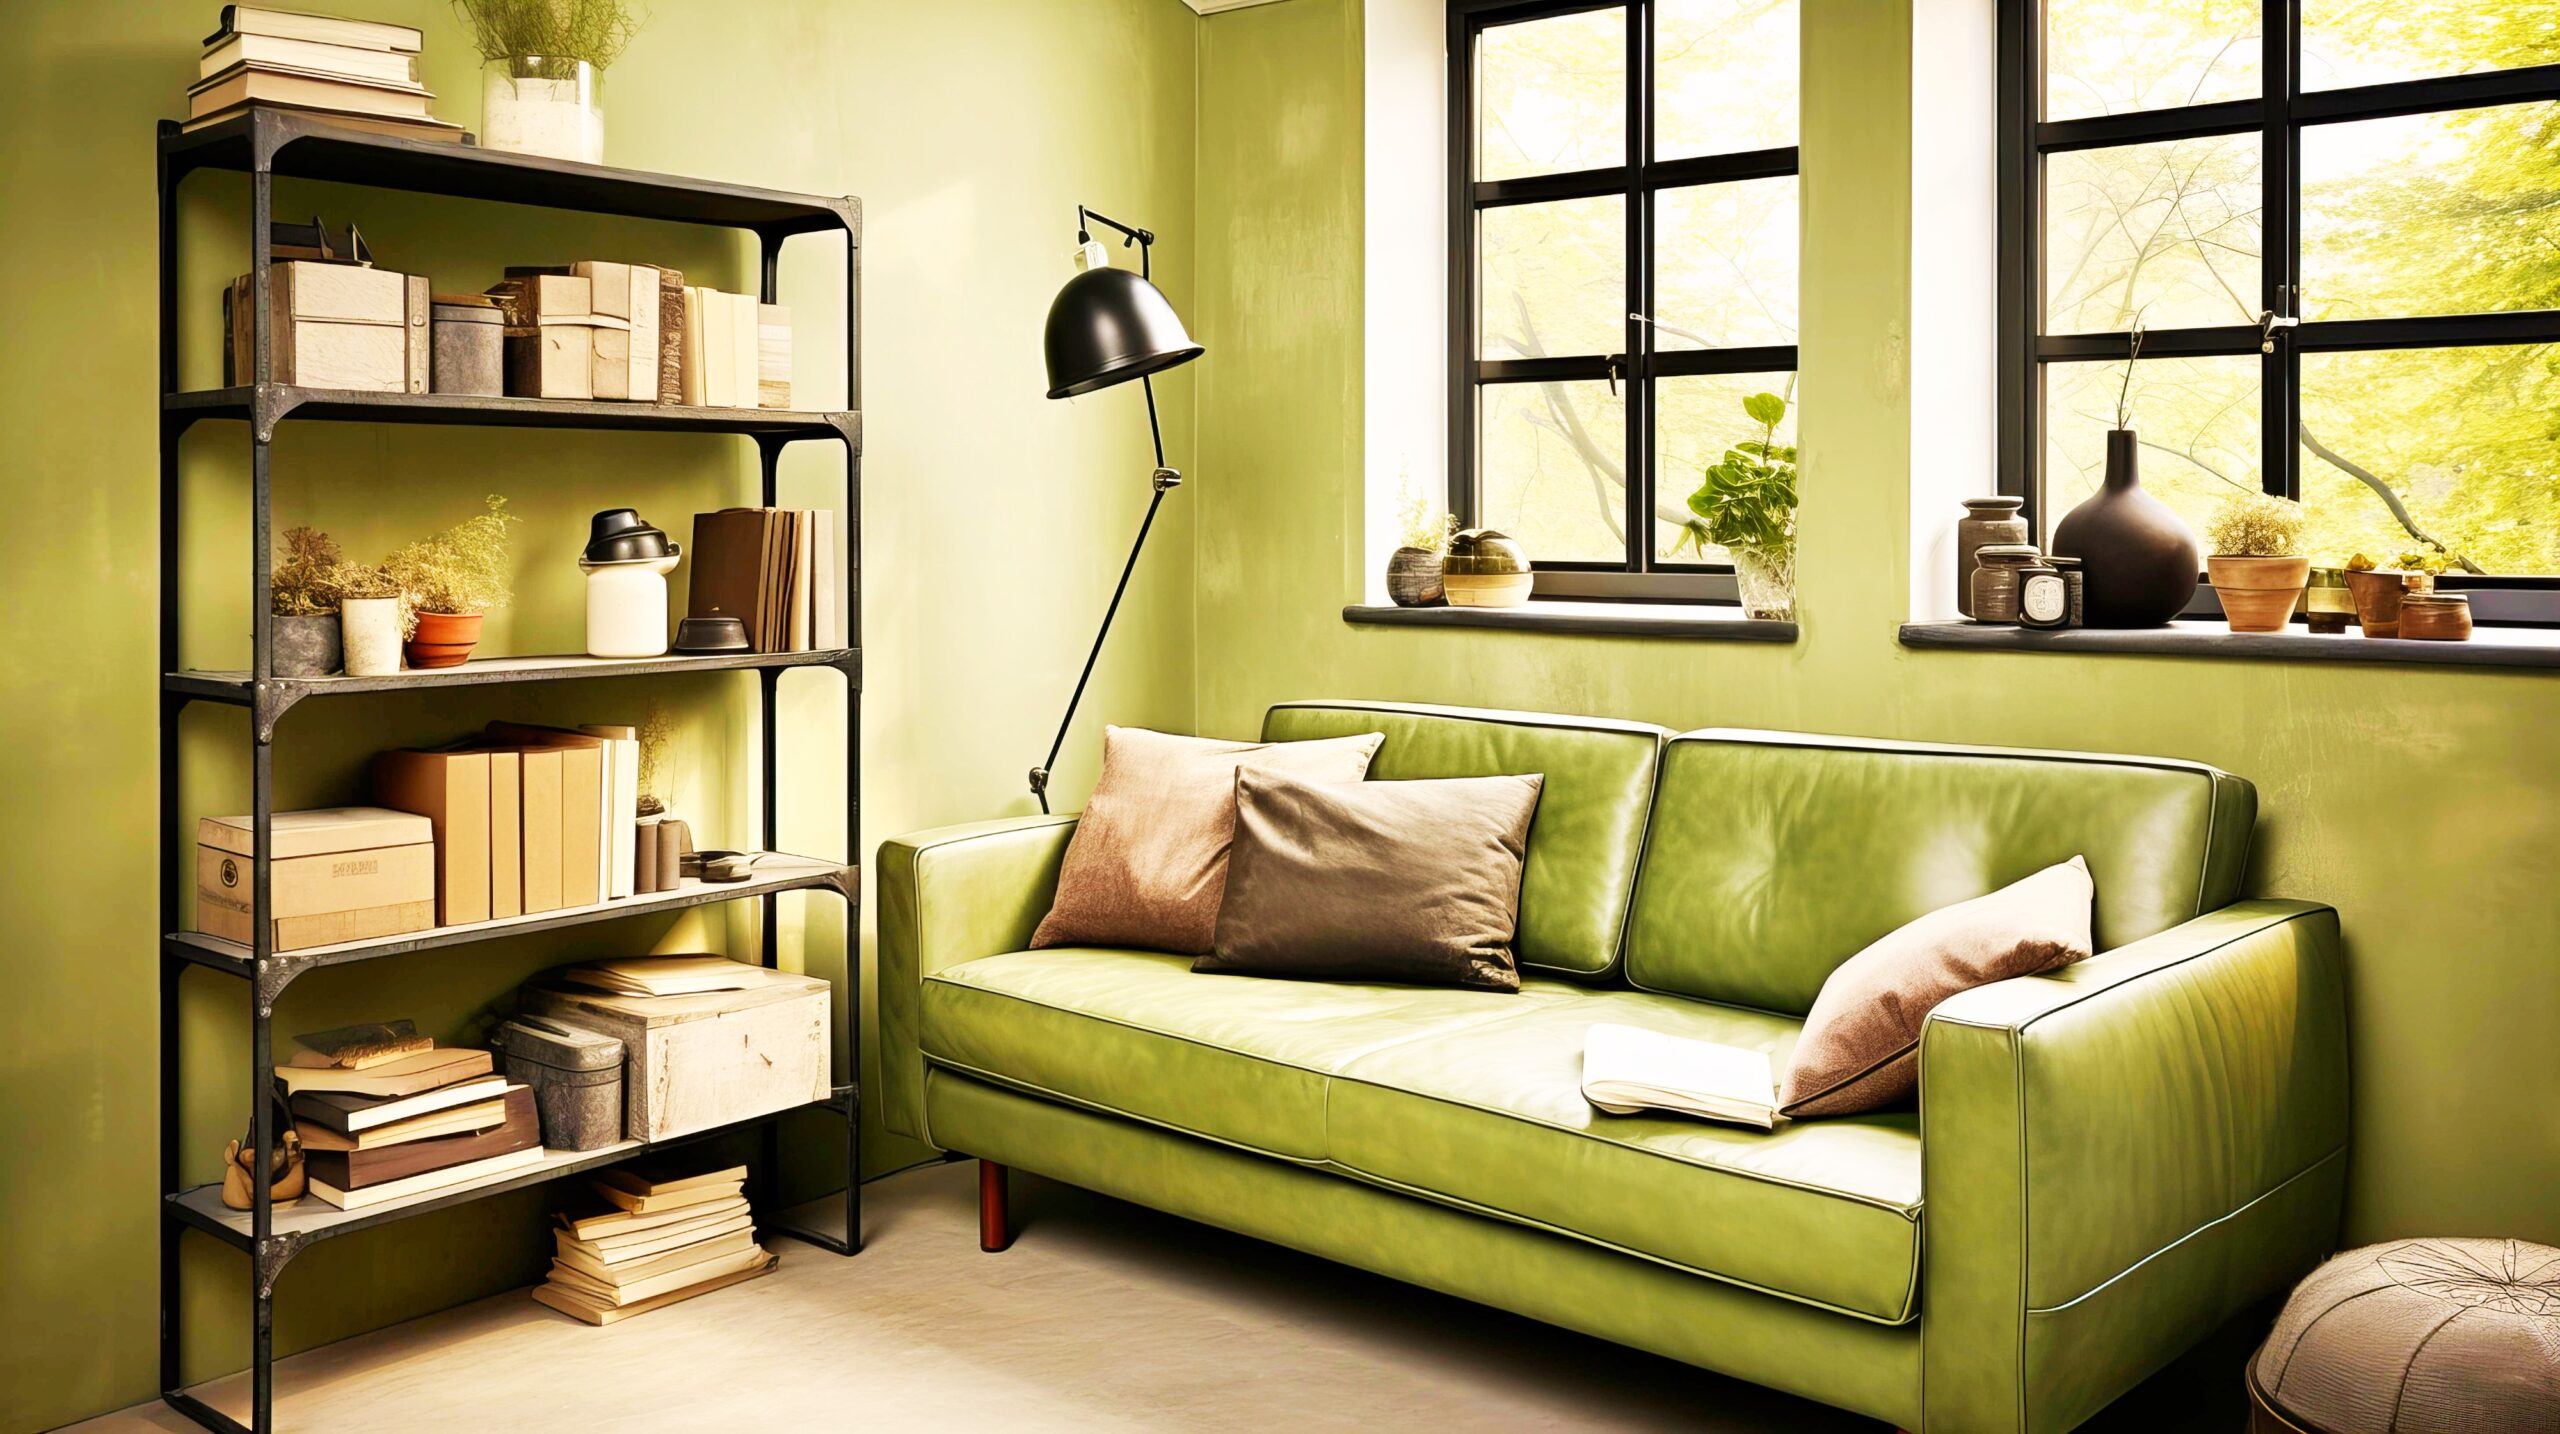 <img src="green.jpg" alt="green reading nook in bedroom"/>